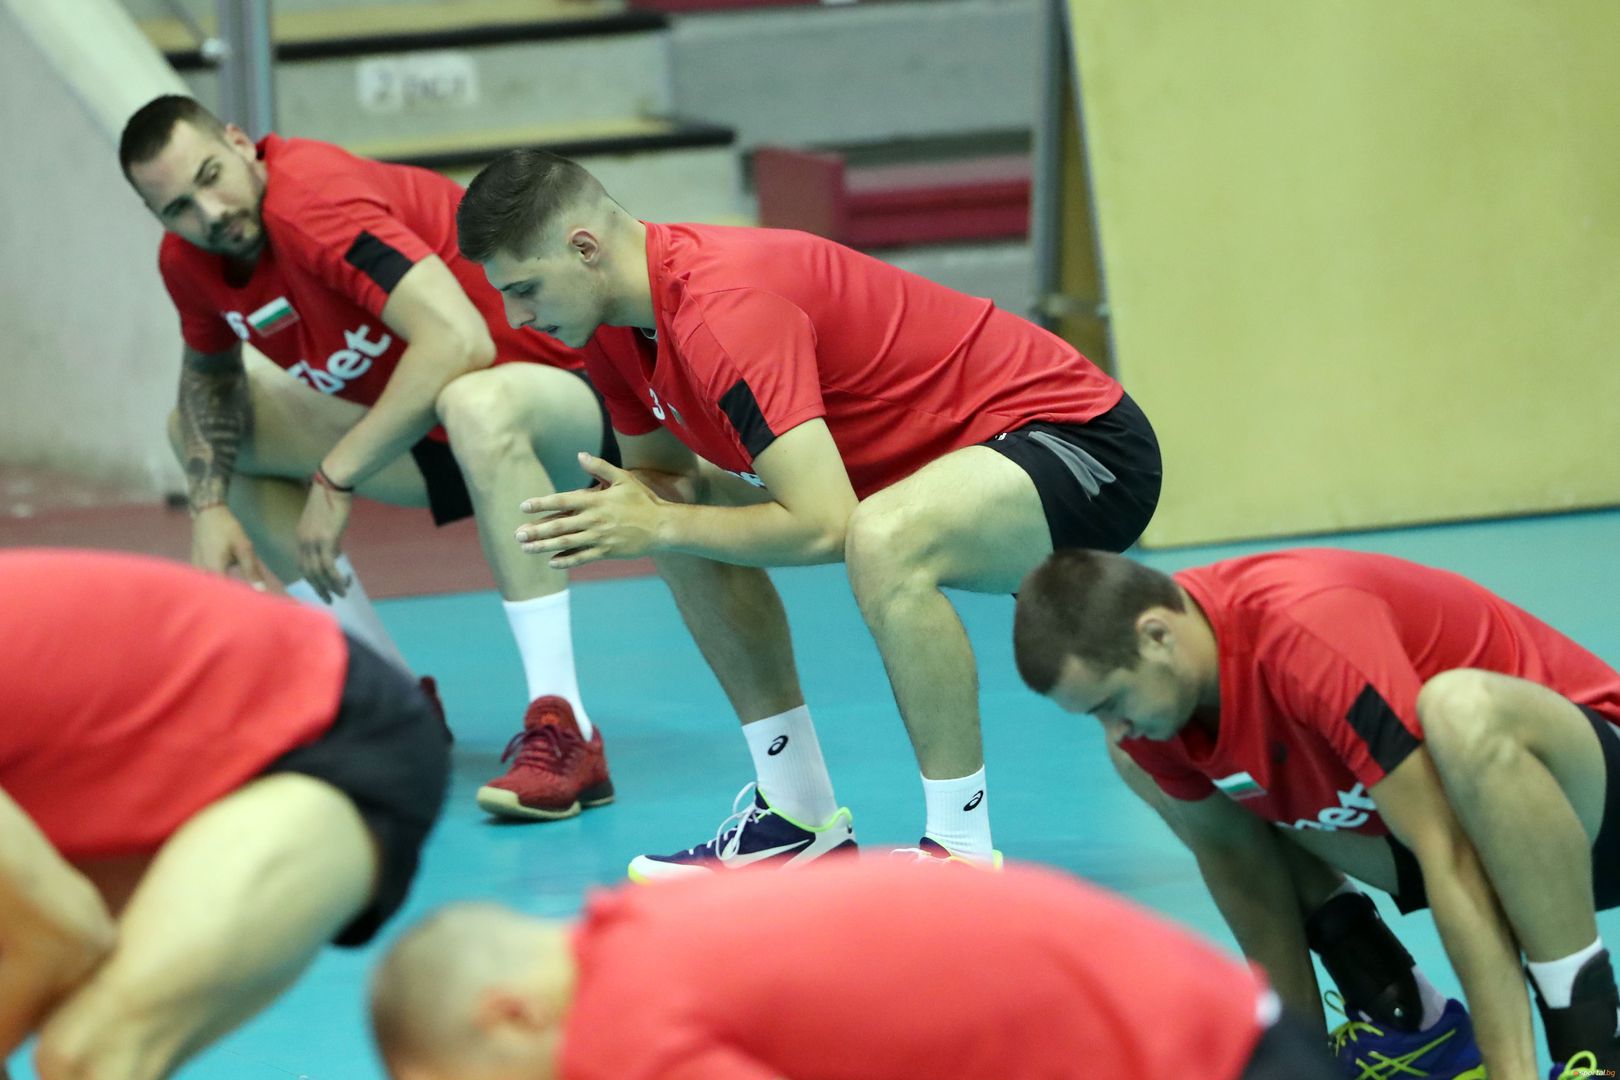 Националите по волейбол започнаха подготовка за СП